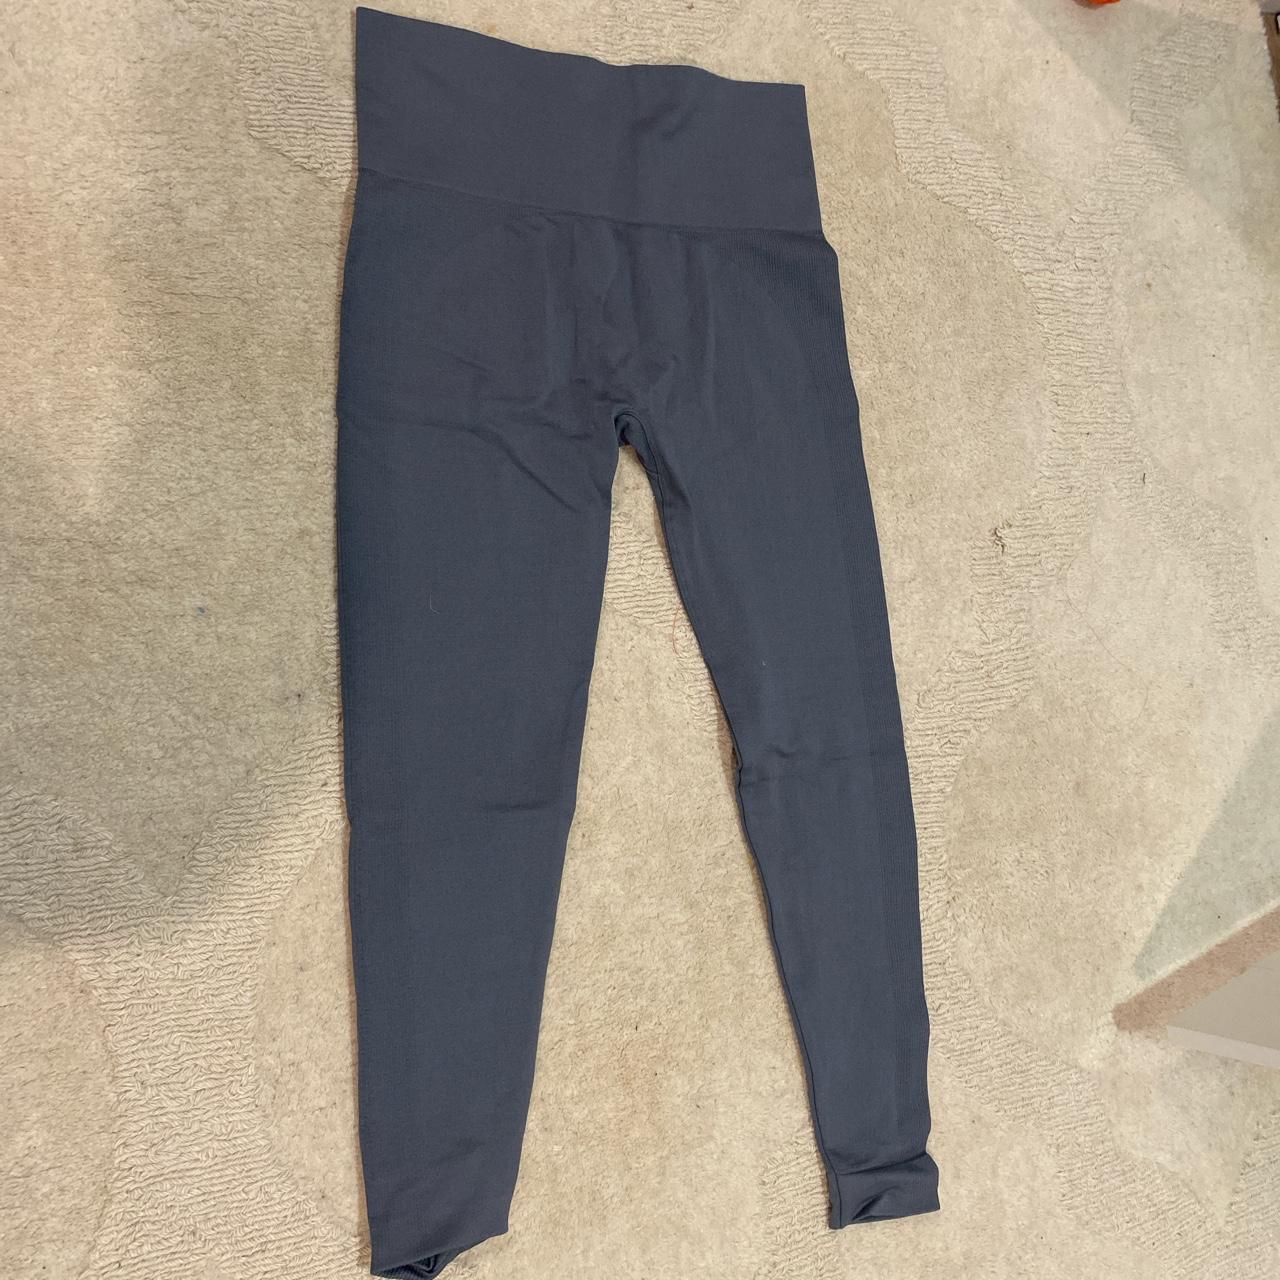 grey set active leggings size : L worn twice runs small - Depop